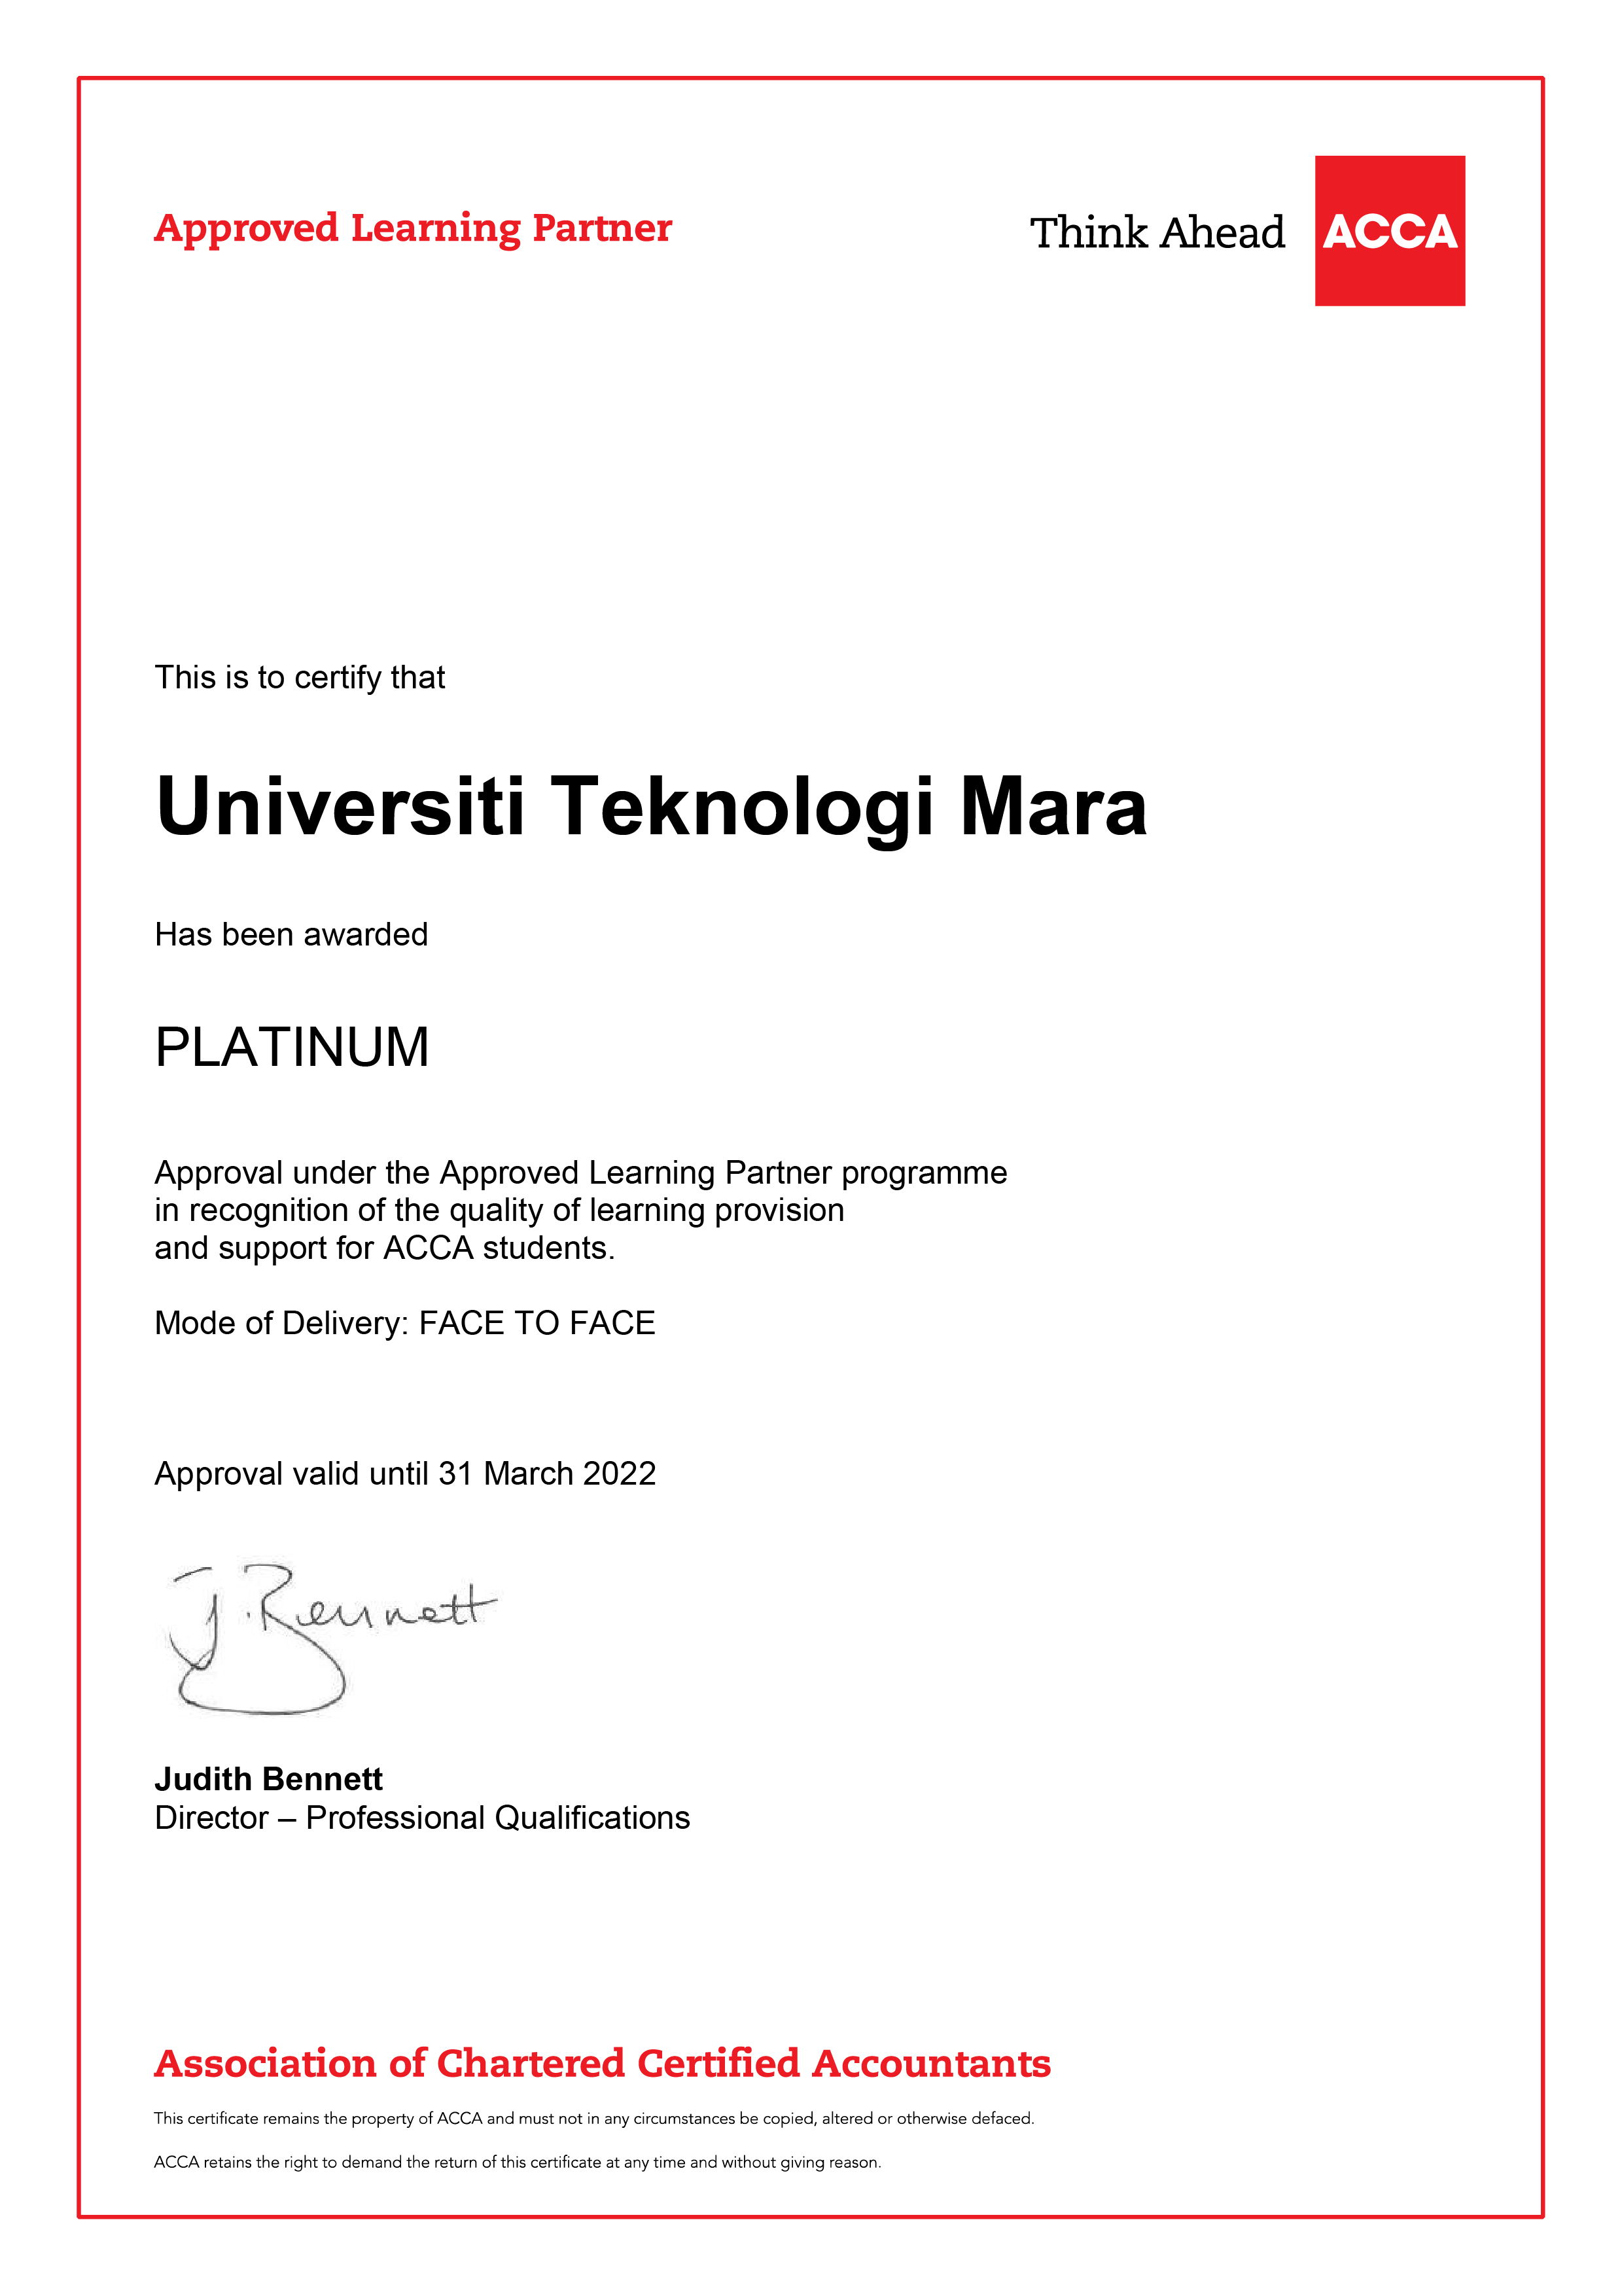 universiti-teknologi-mara-f2f---platinum-alp-certificate.jpg